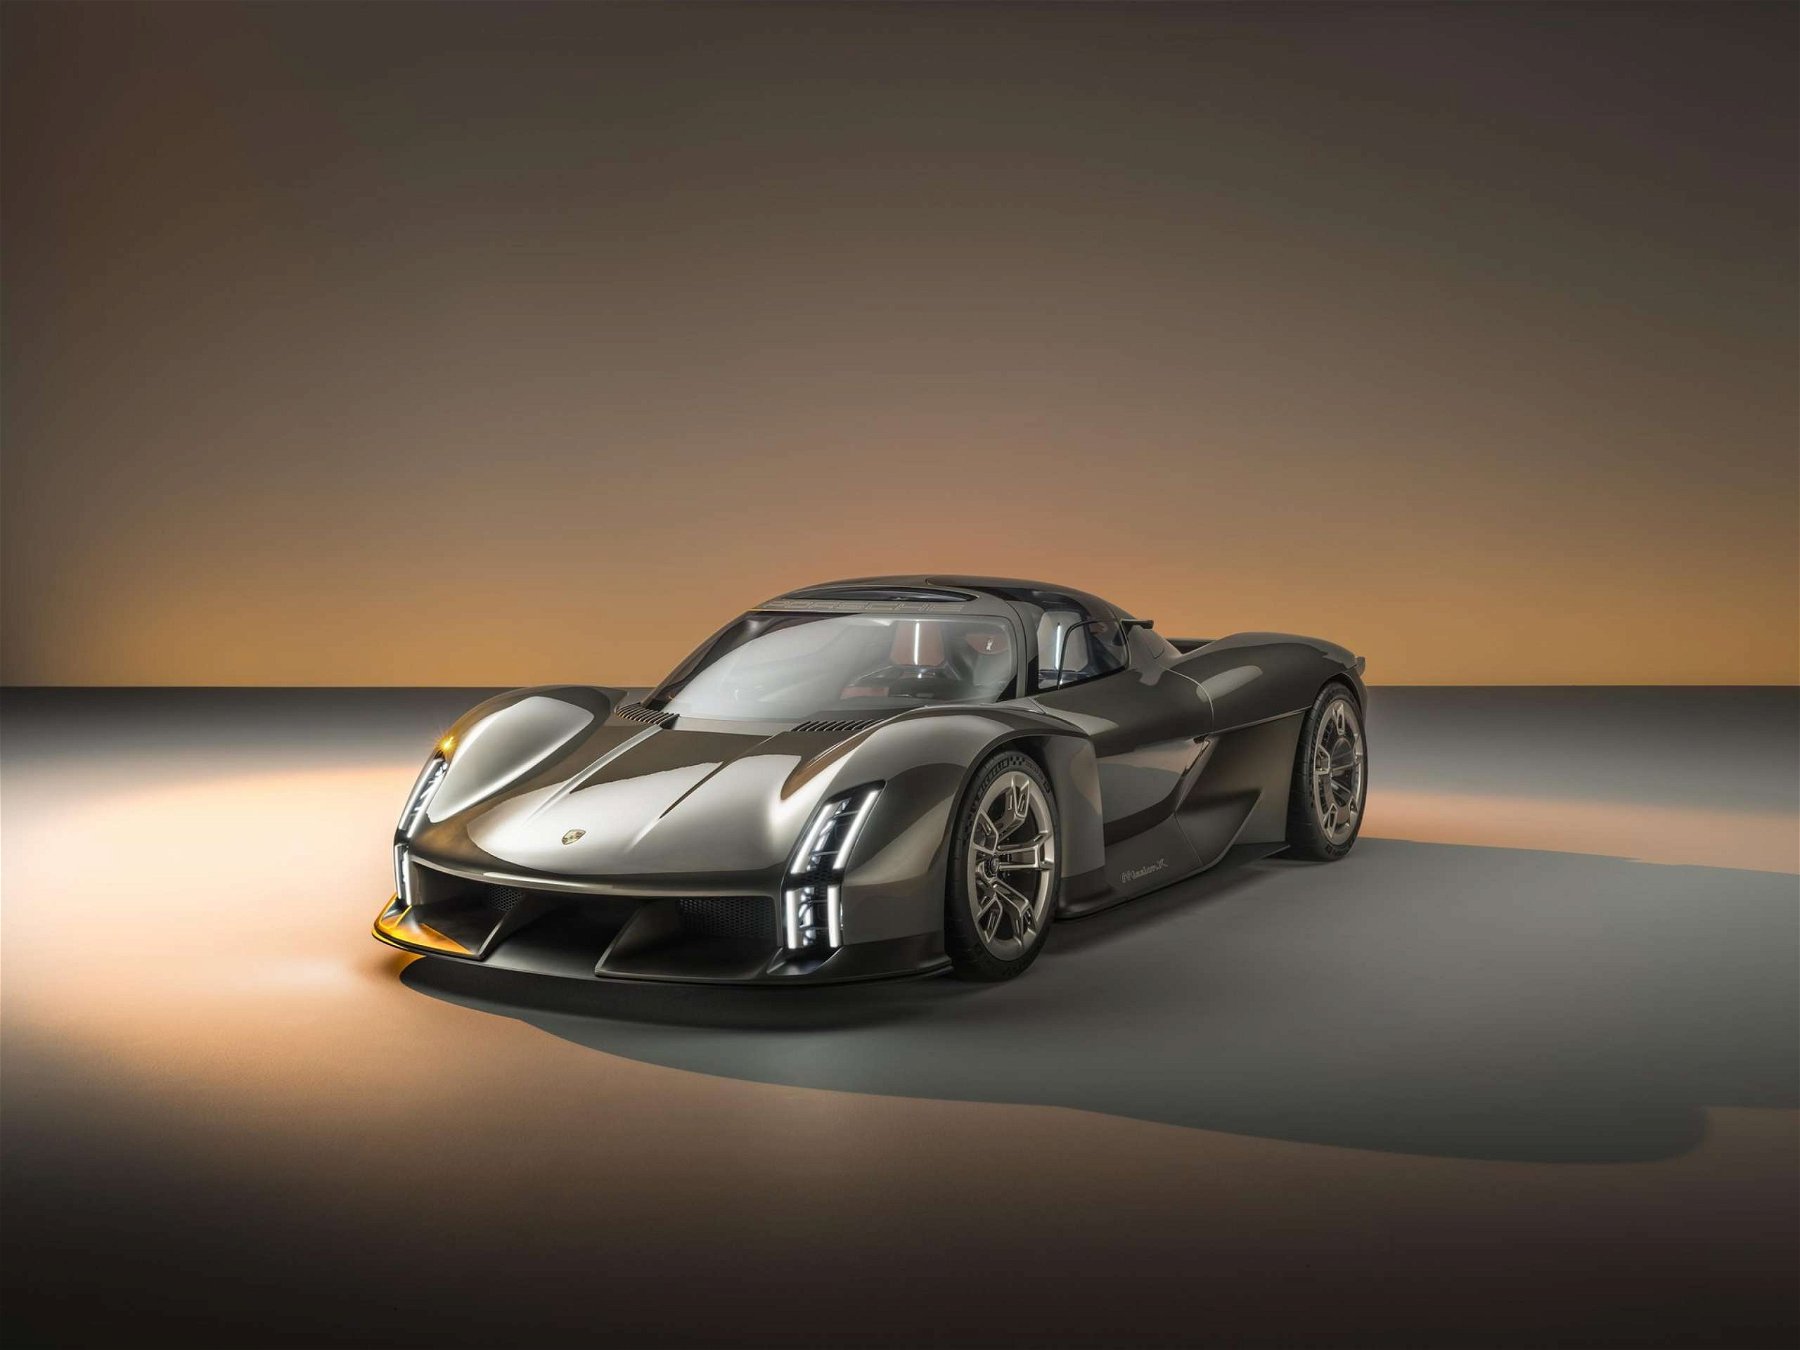 Porsche Mission X concept, Porsche 75th anniversary, design, powertrain,  technical details